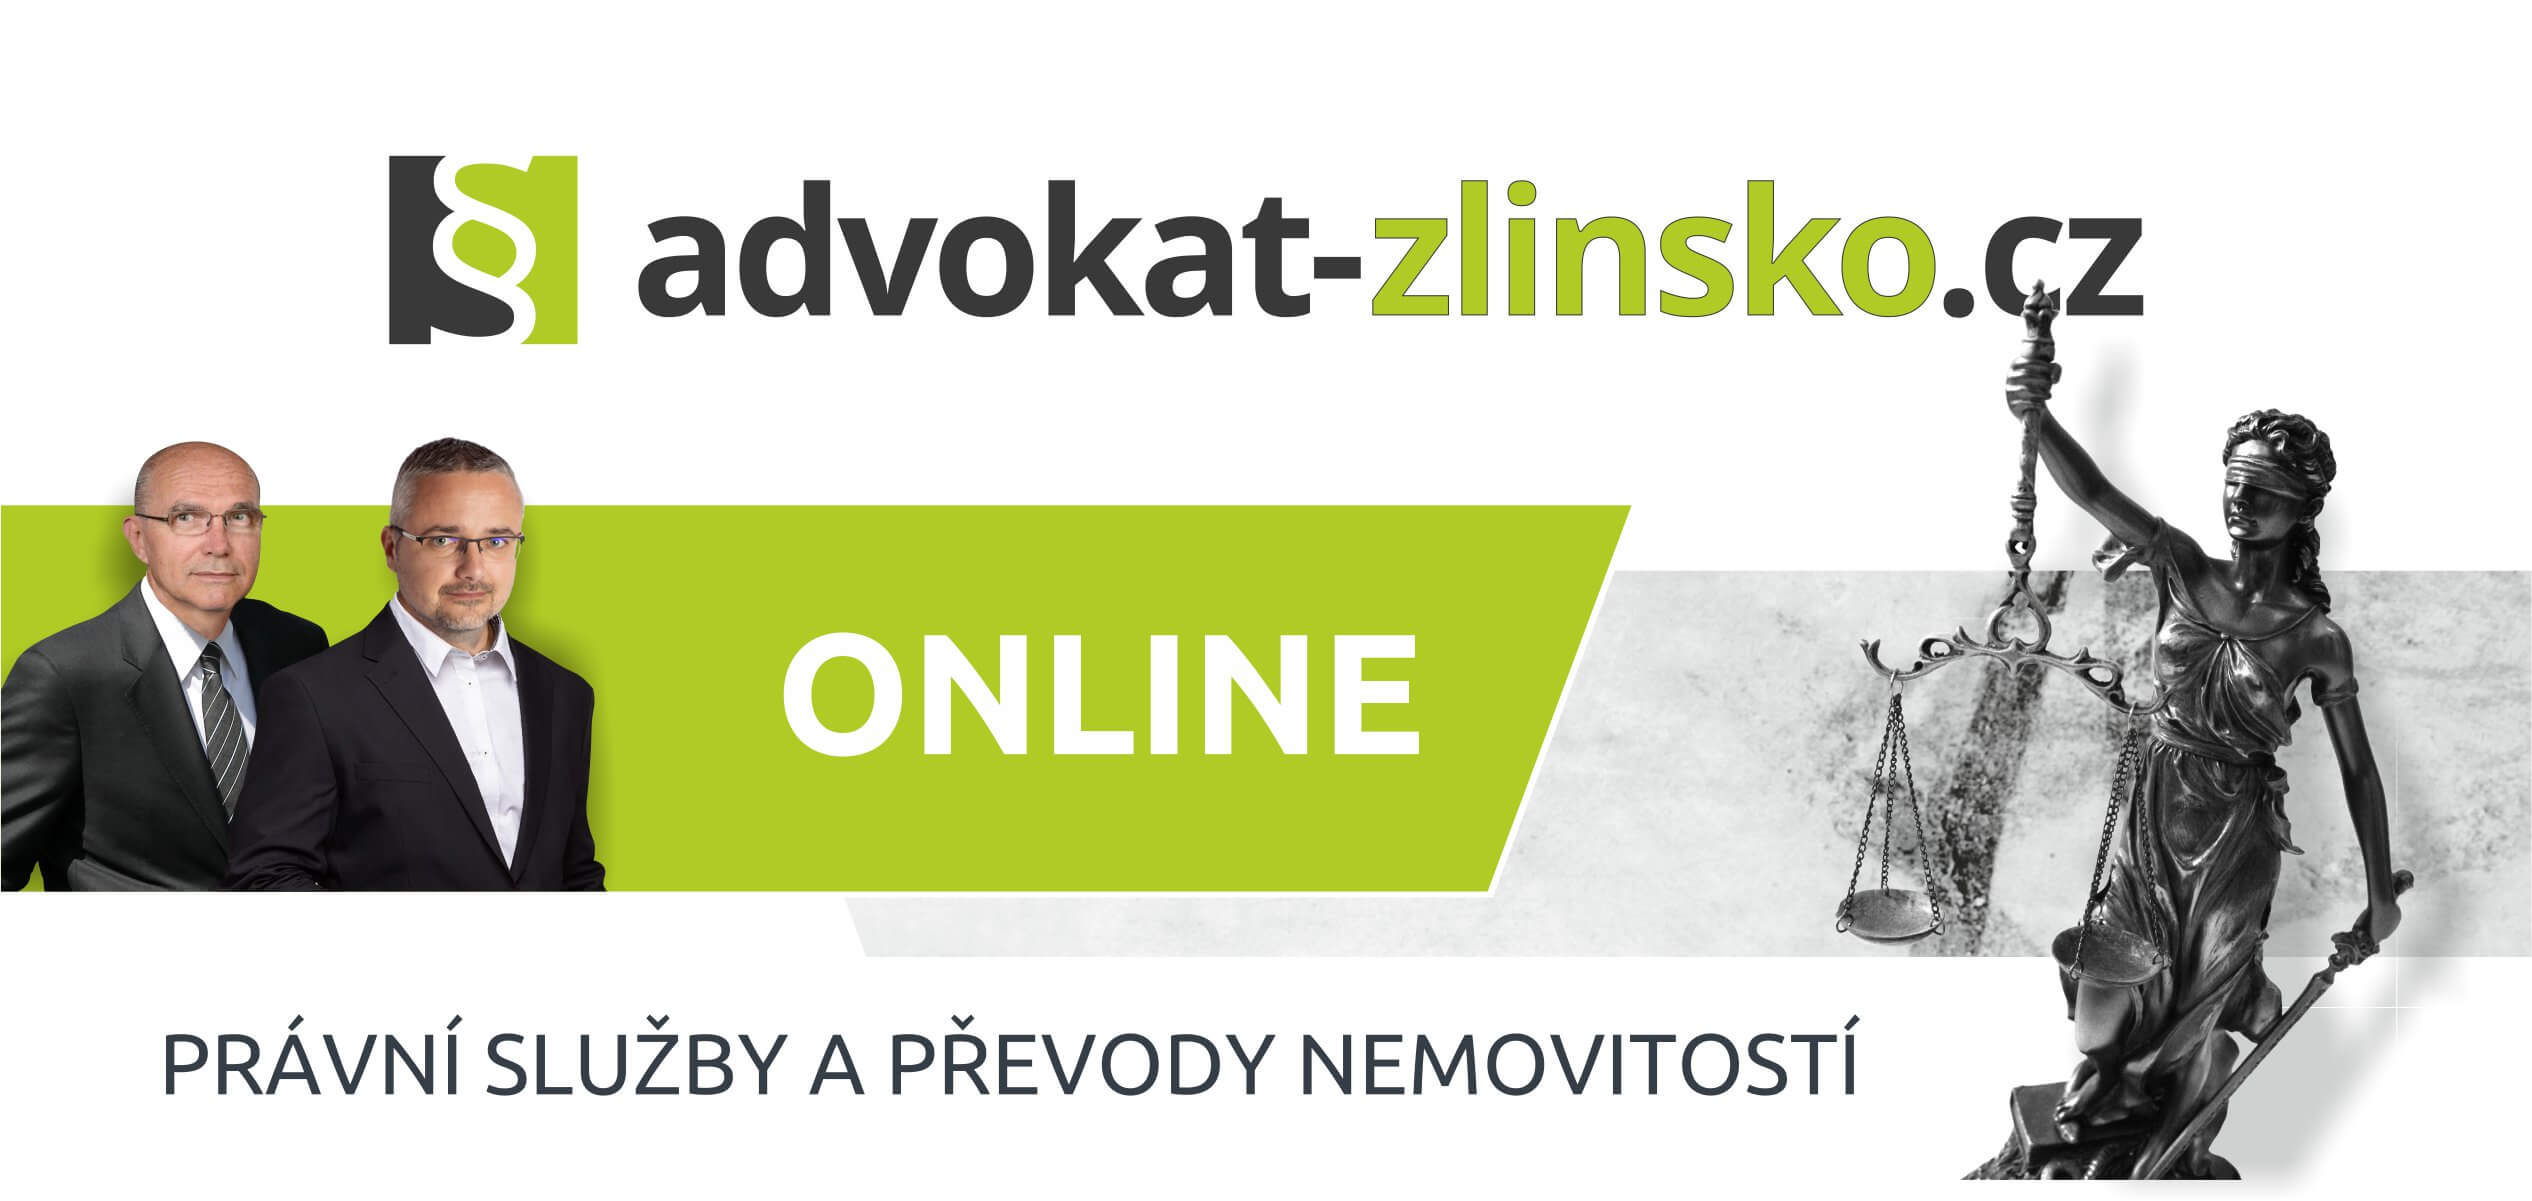 advokat-zlinsko.cz : Mgr. Zdeněk Rumplík, JUDr. Petr Hradil